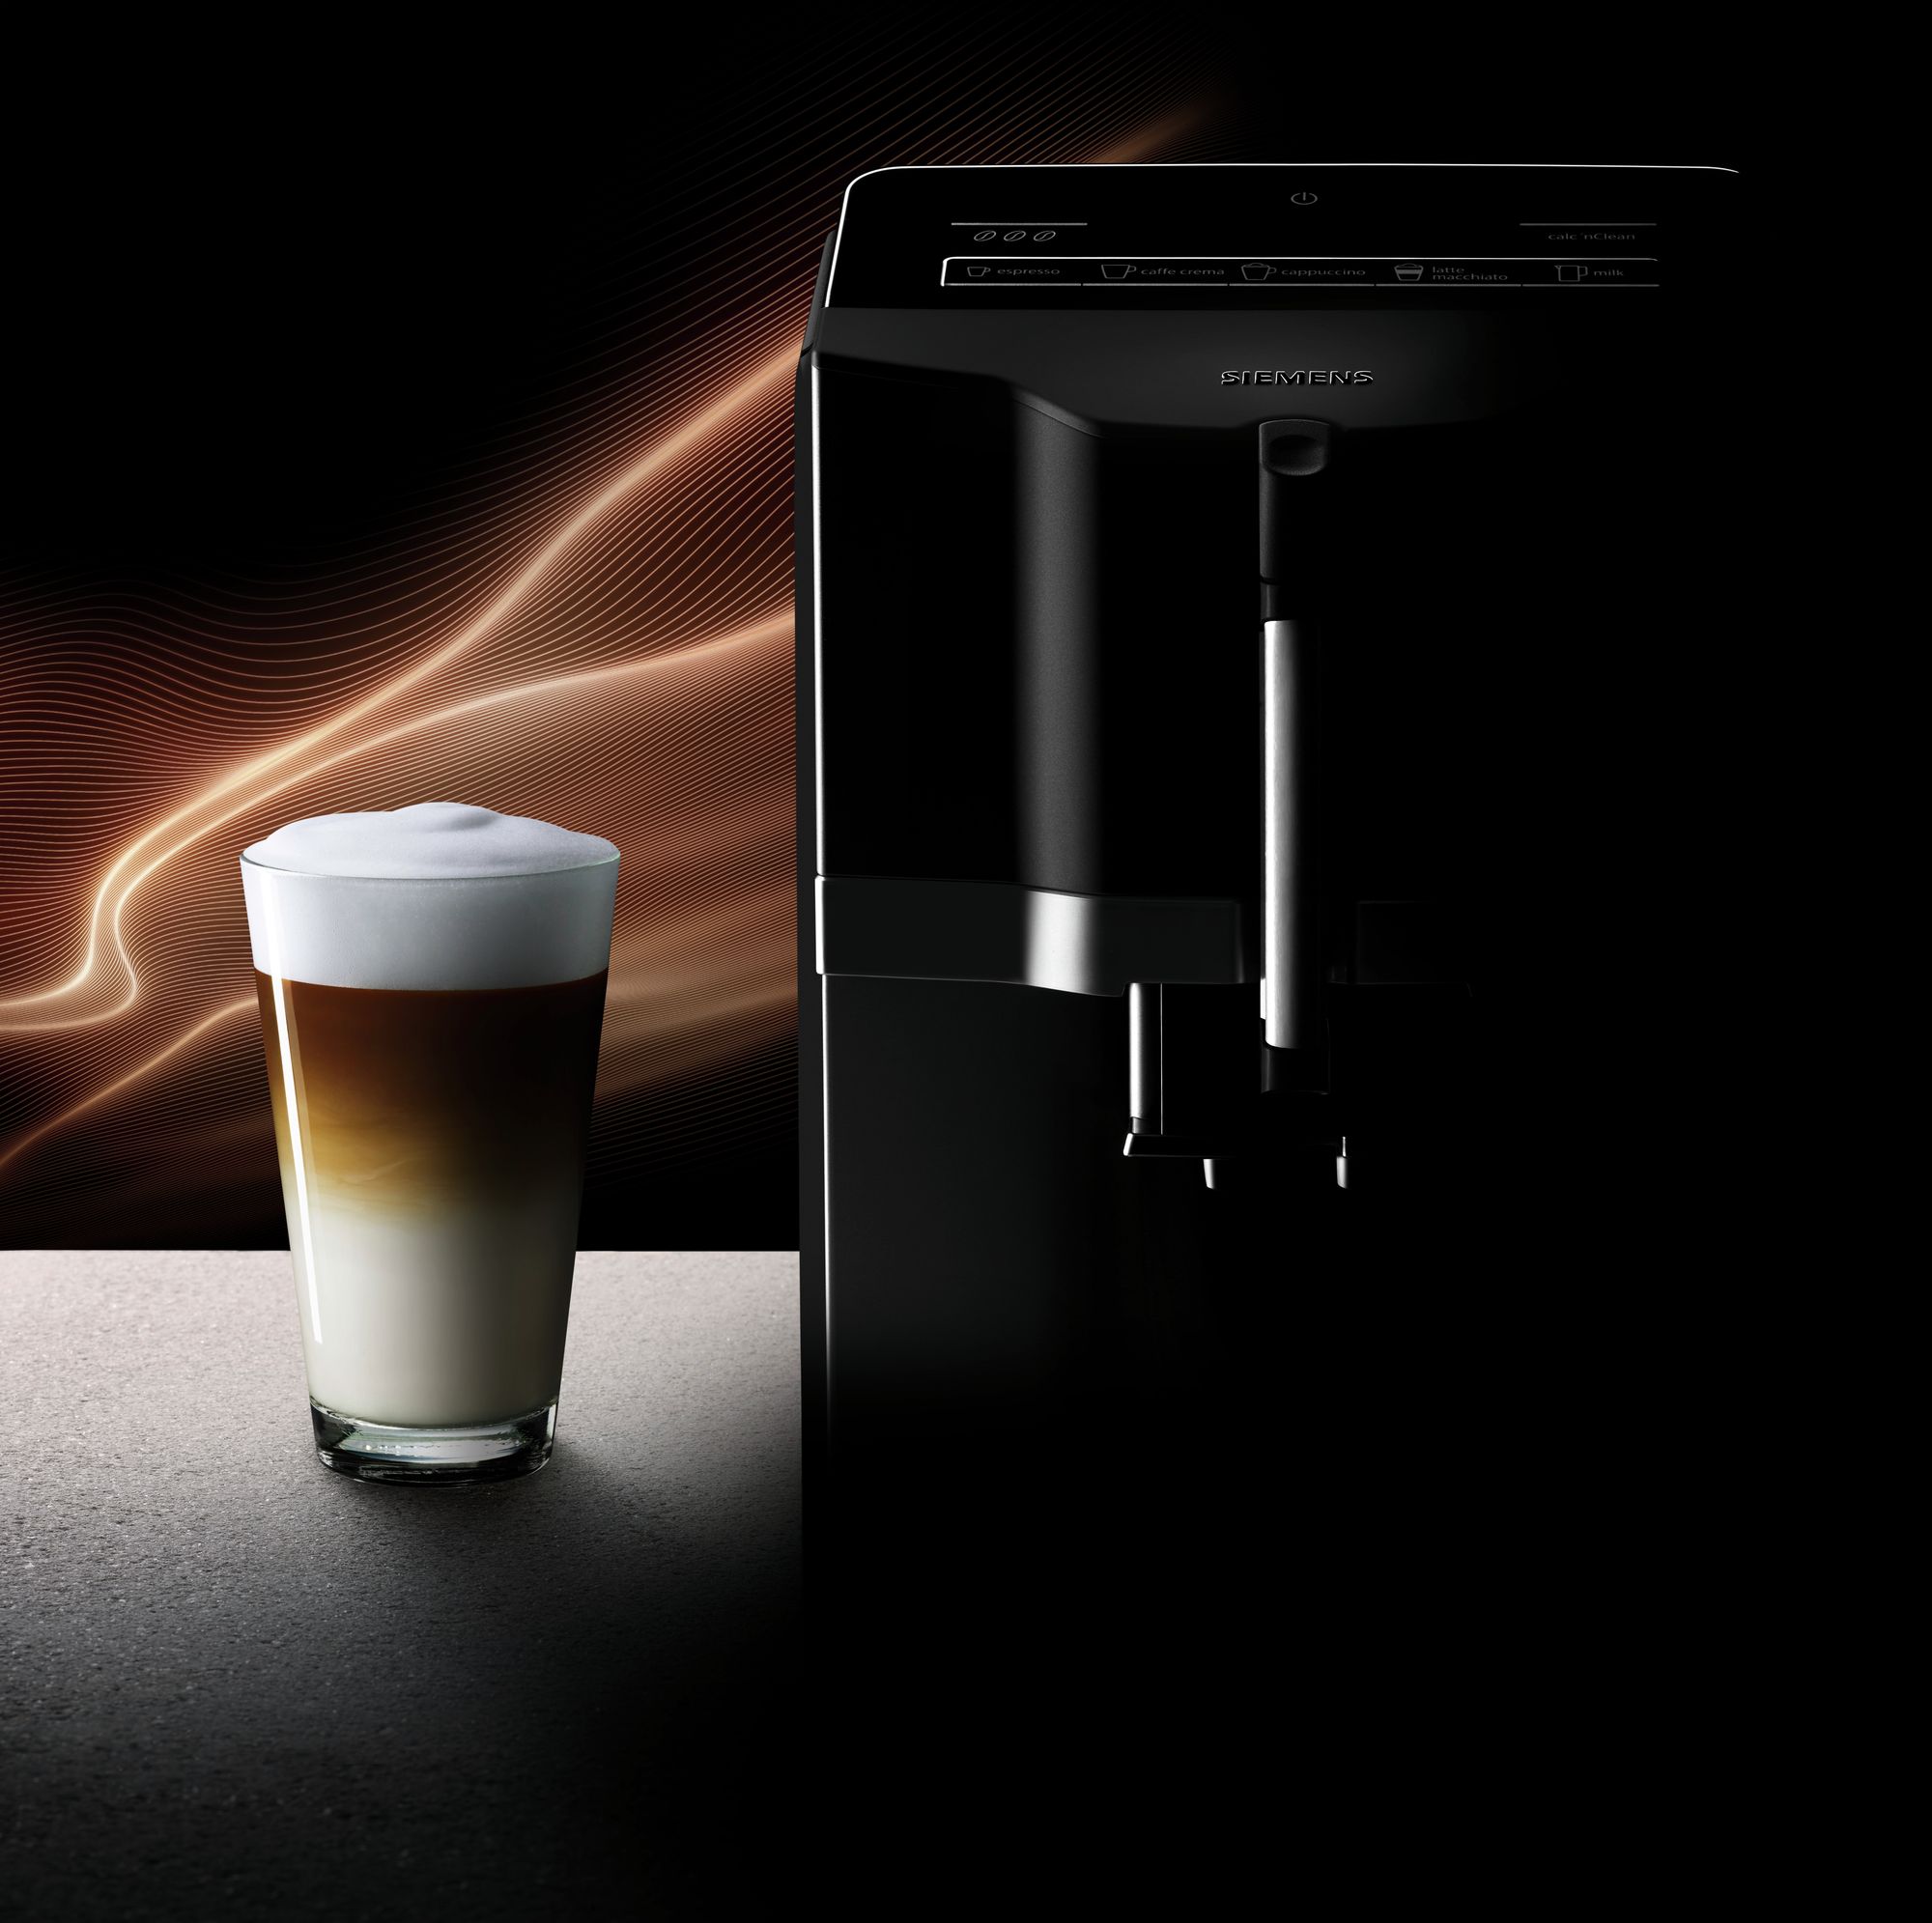 Fully automatic coffee machine EQ.3 s300 Grafit